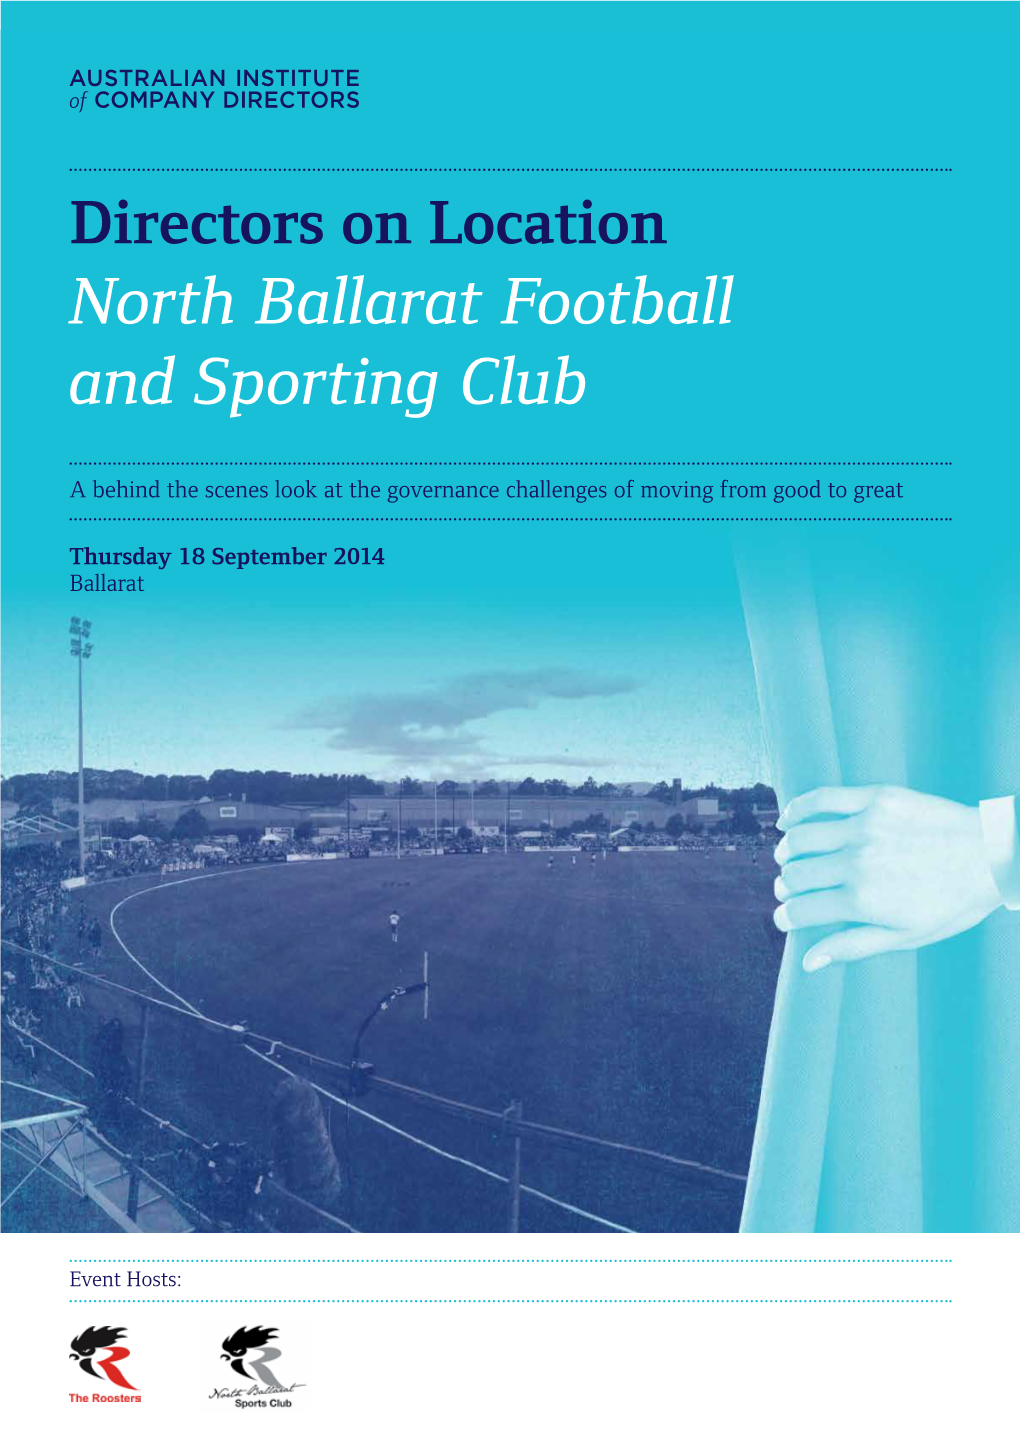 North Ballarat Football and Sporting Club